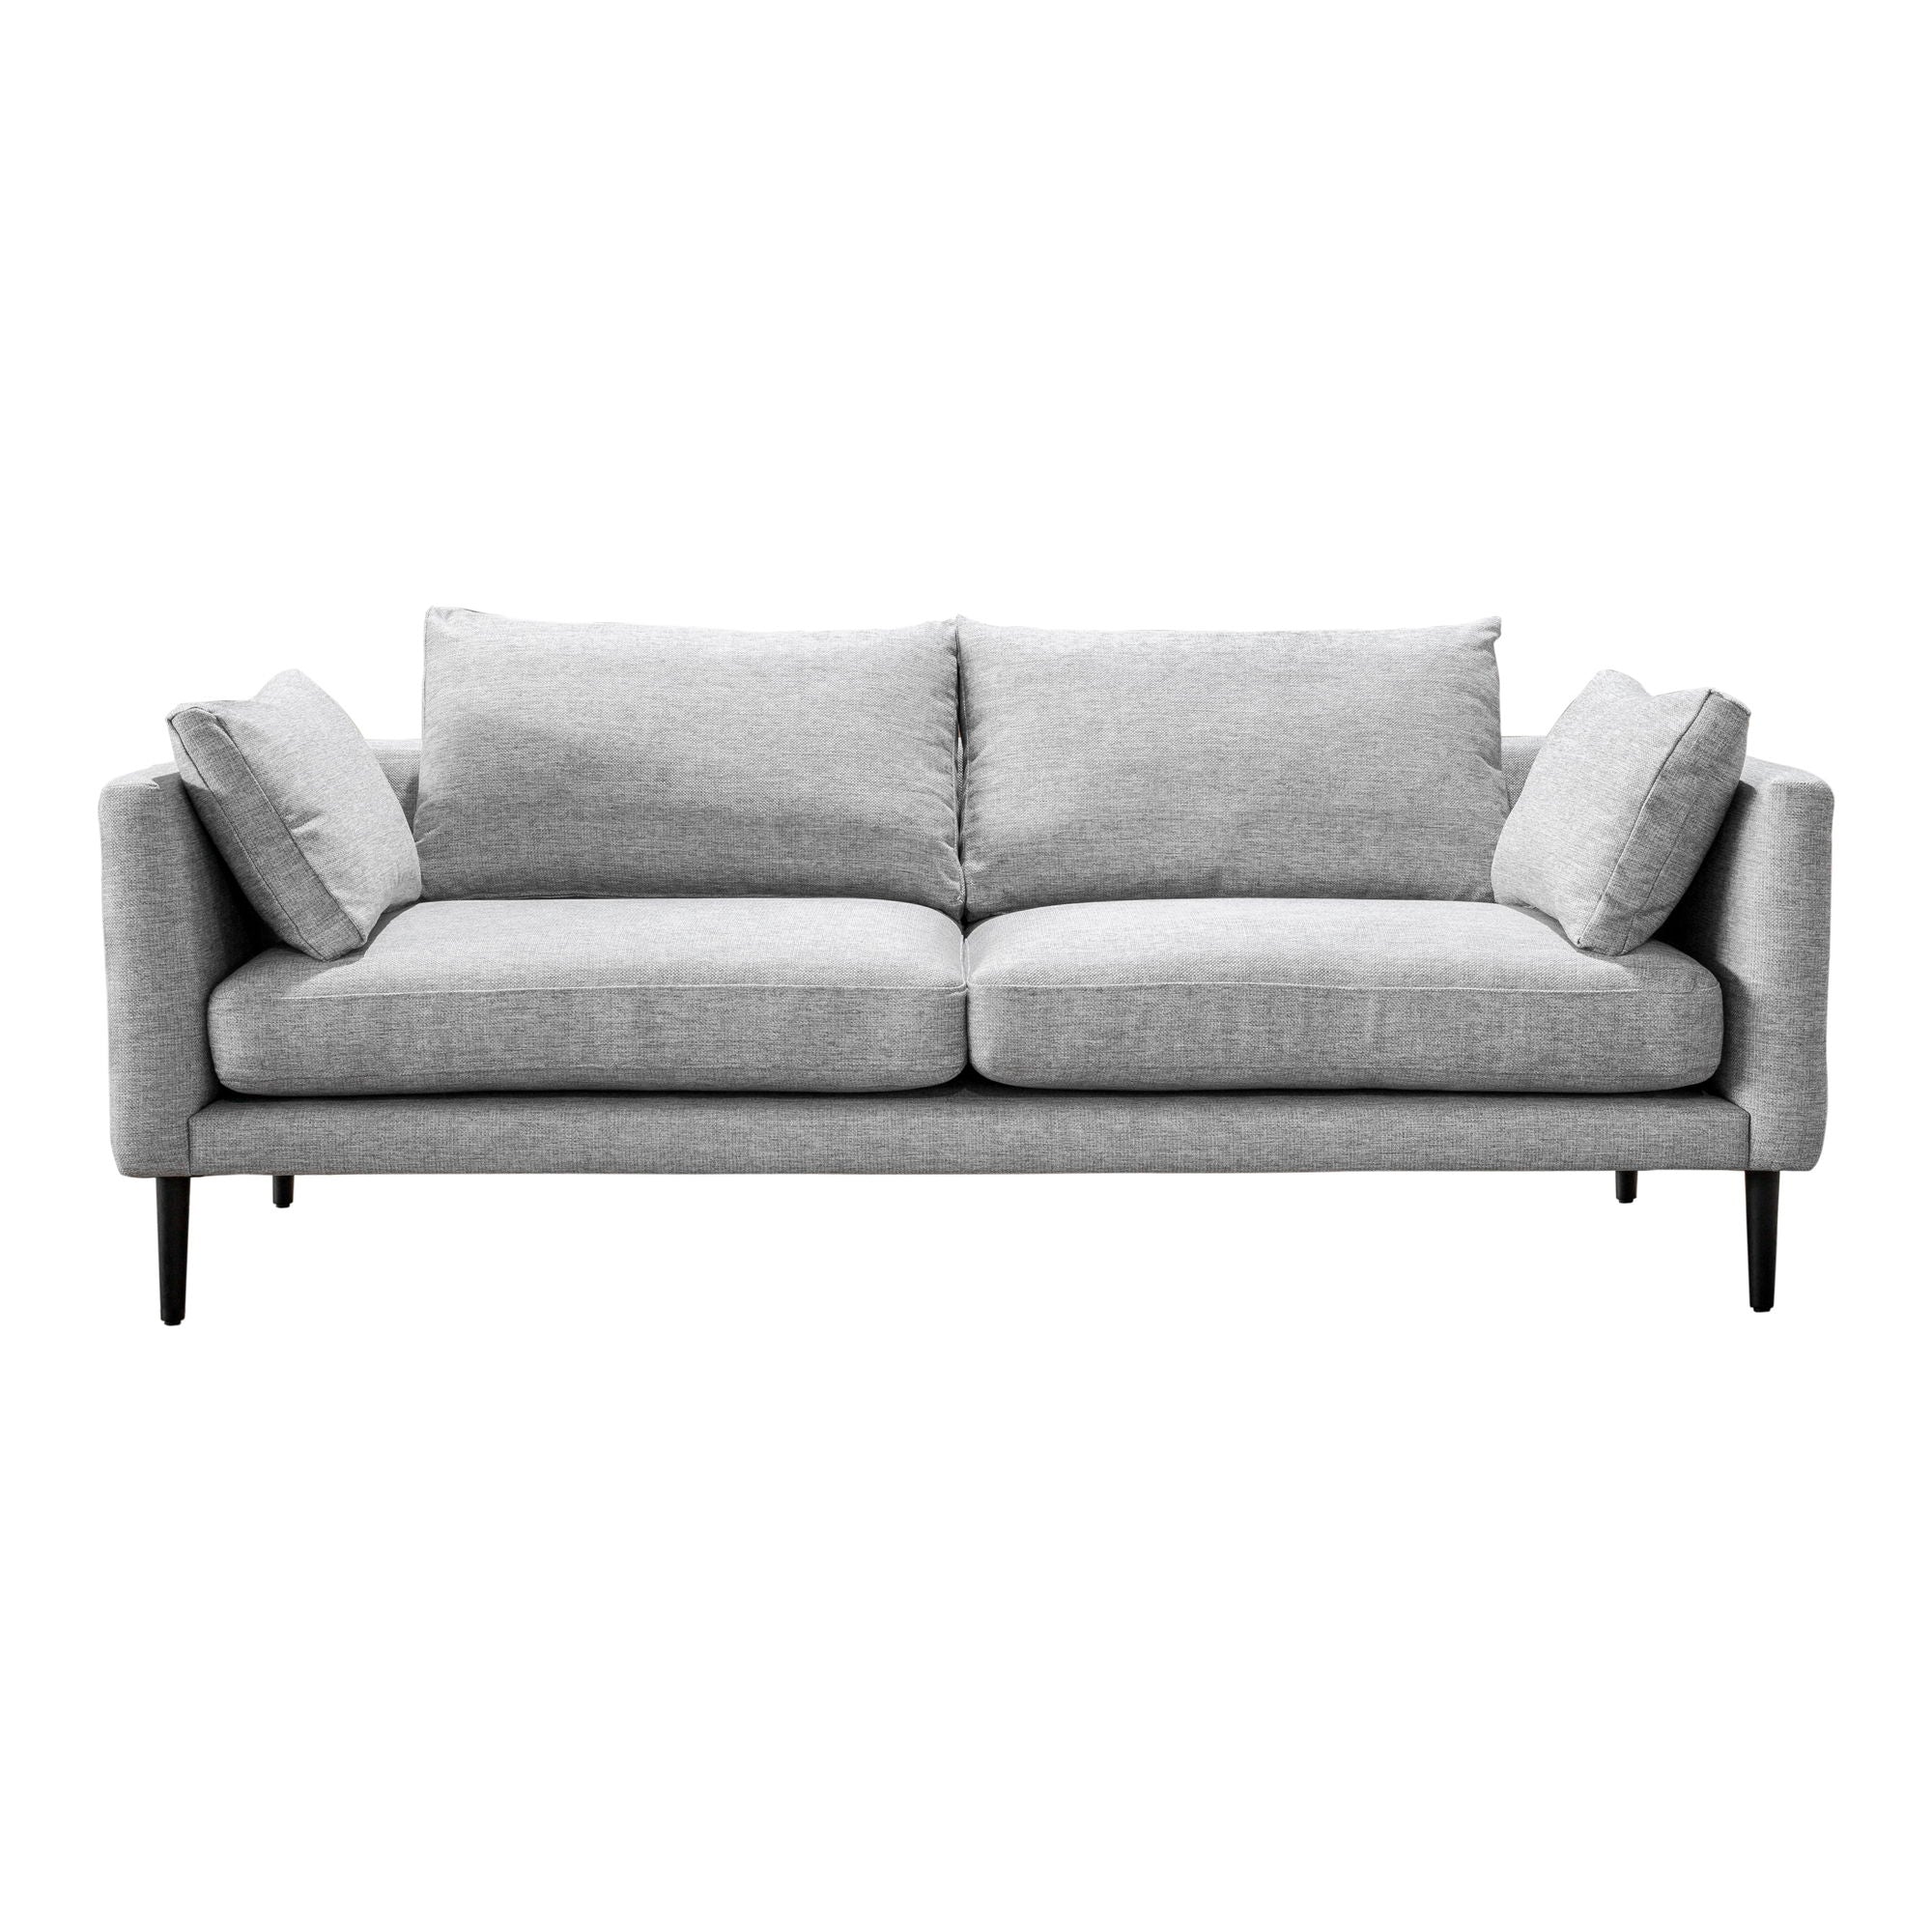 Raval - Sofa - Light Gray